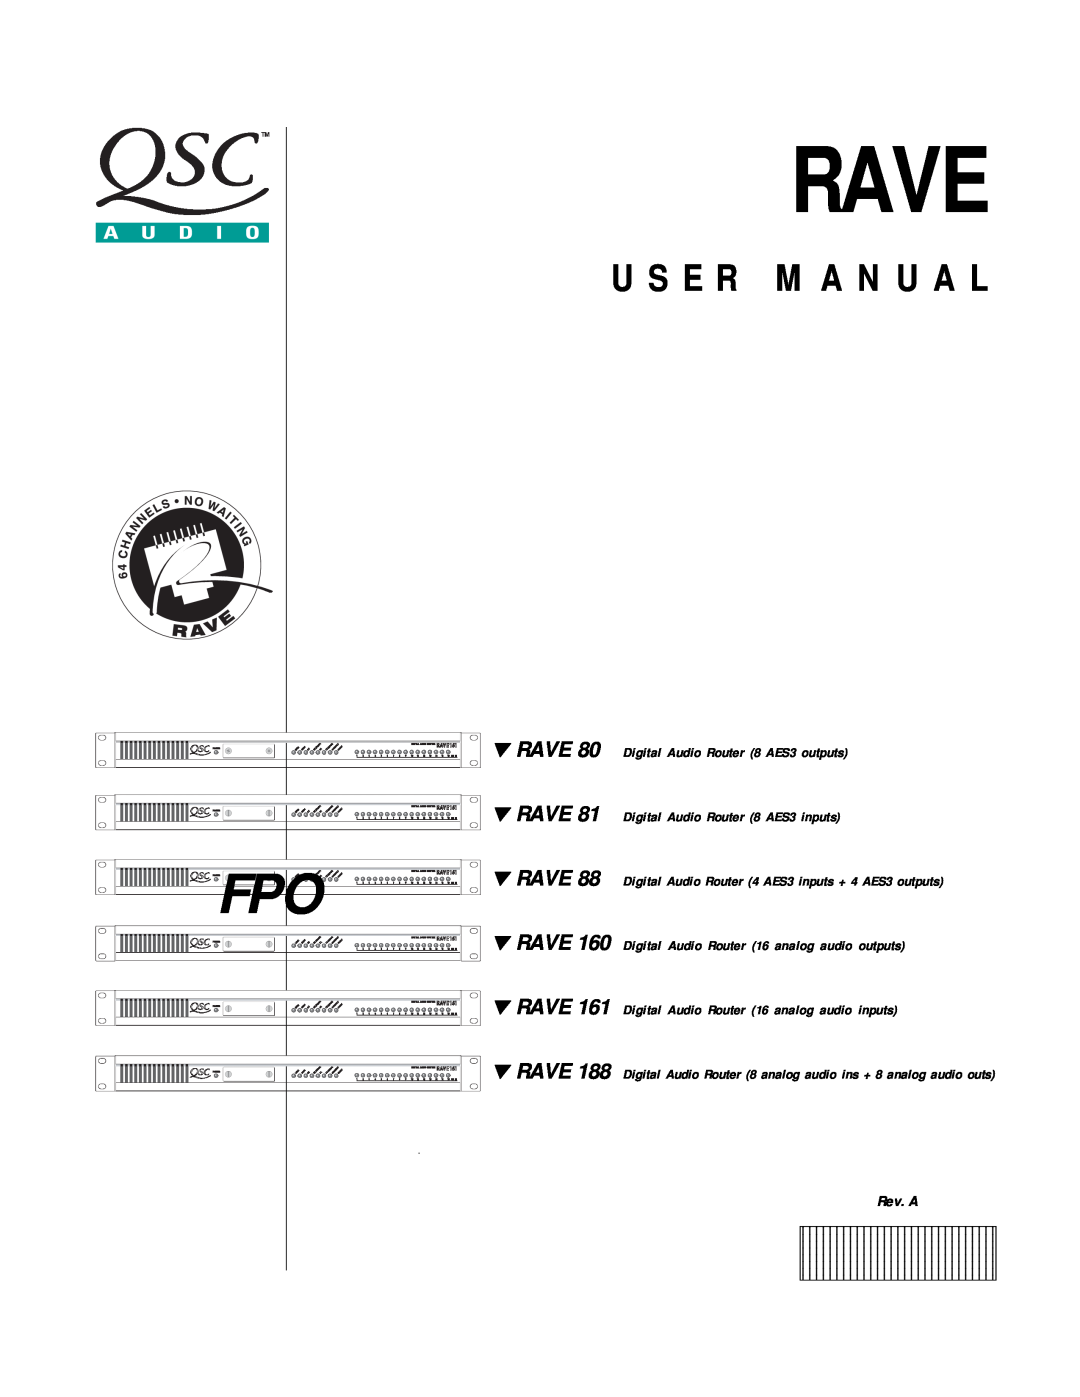 QSC Audio RAVE 161 user manual Rave, U S E R M A N U A L, Rev. A, Digital Audio Router 8 AES3 outputs, FPO RAVE 88 RAVE 